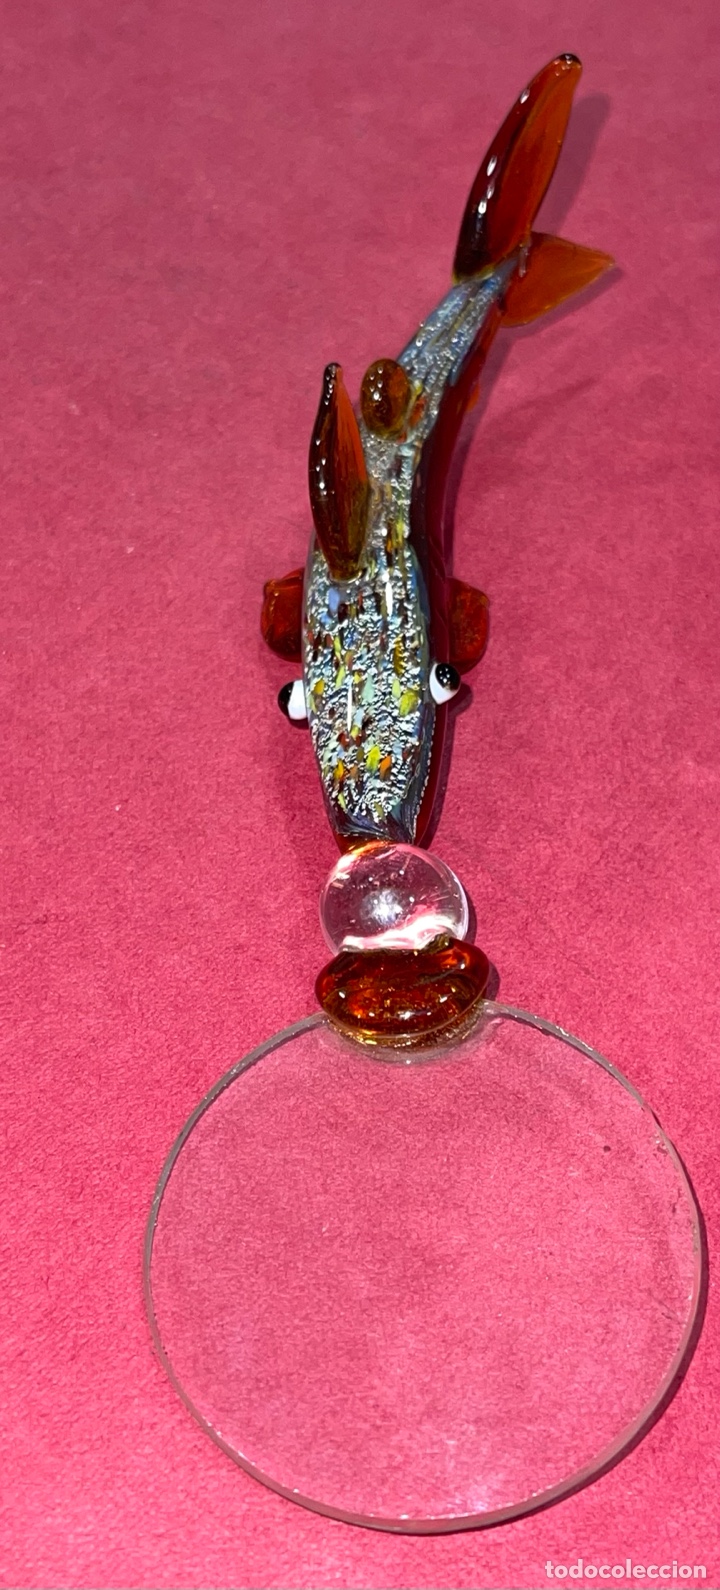 Antigüedades: Magnífica lupa de colección con mango en cristal de Murano. - Foto 2 - 291466133